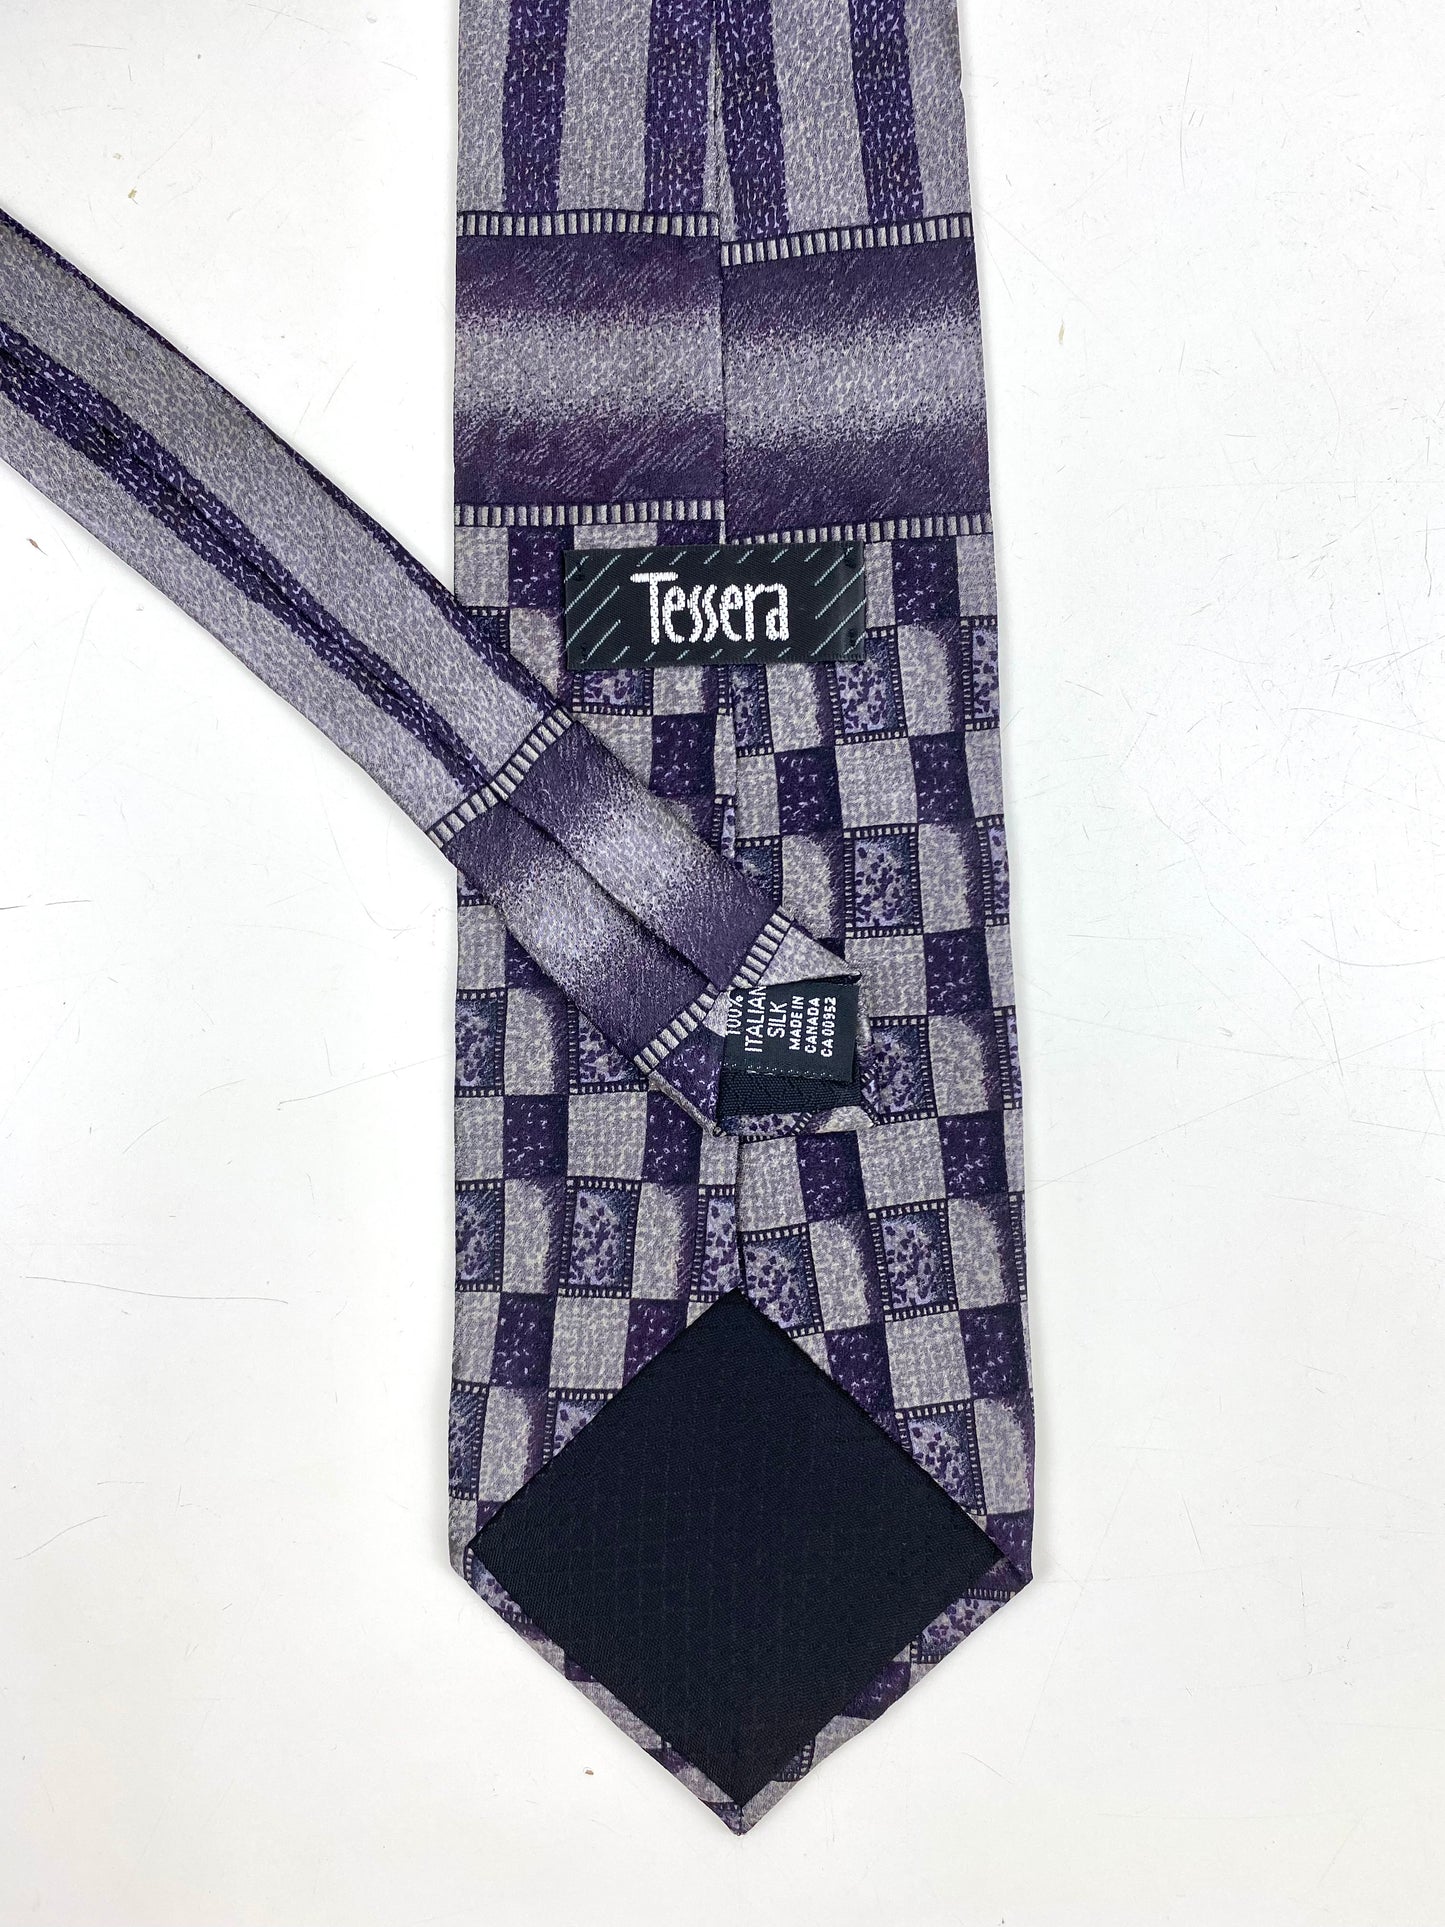 90s Deadstock Silk Necktie, Men's Vintage Purple Check & Stripe Pattern Tie, NOS